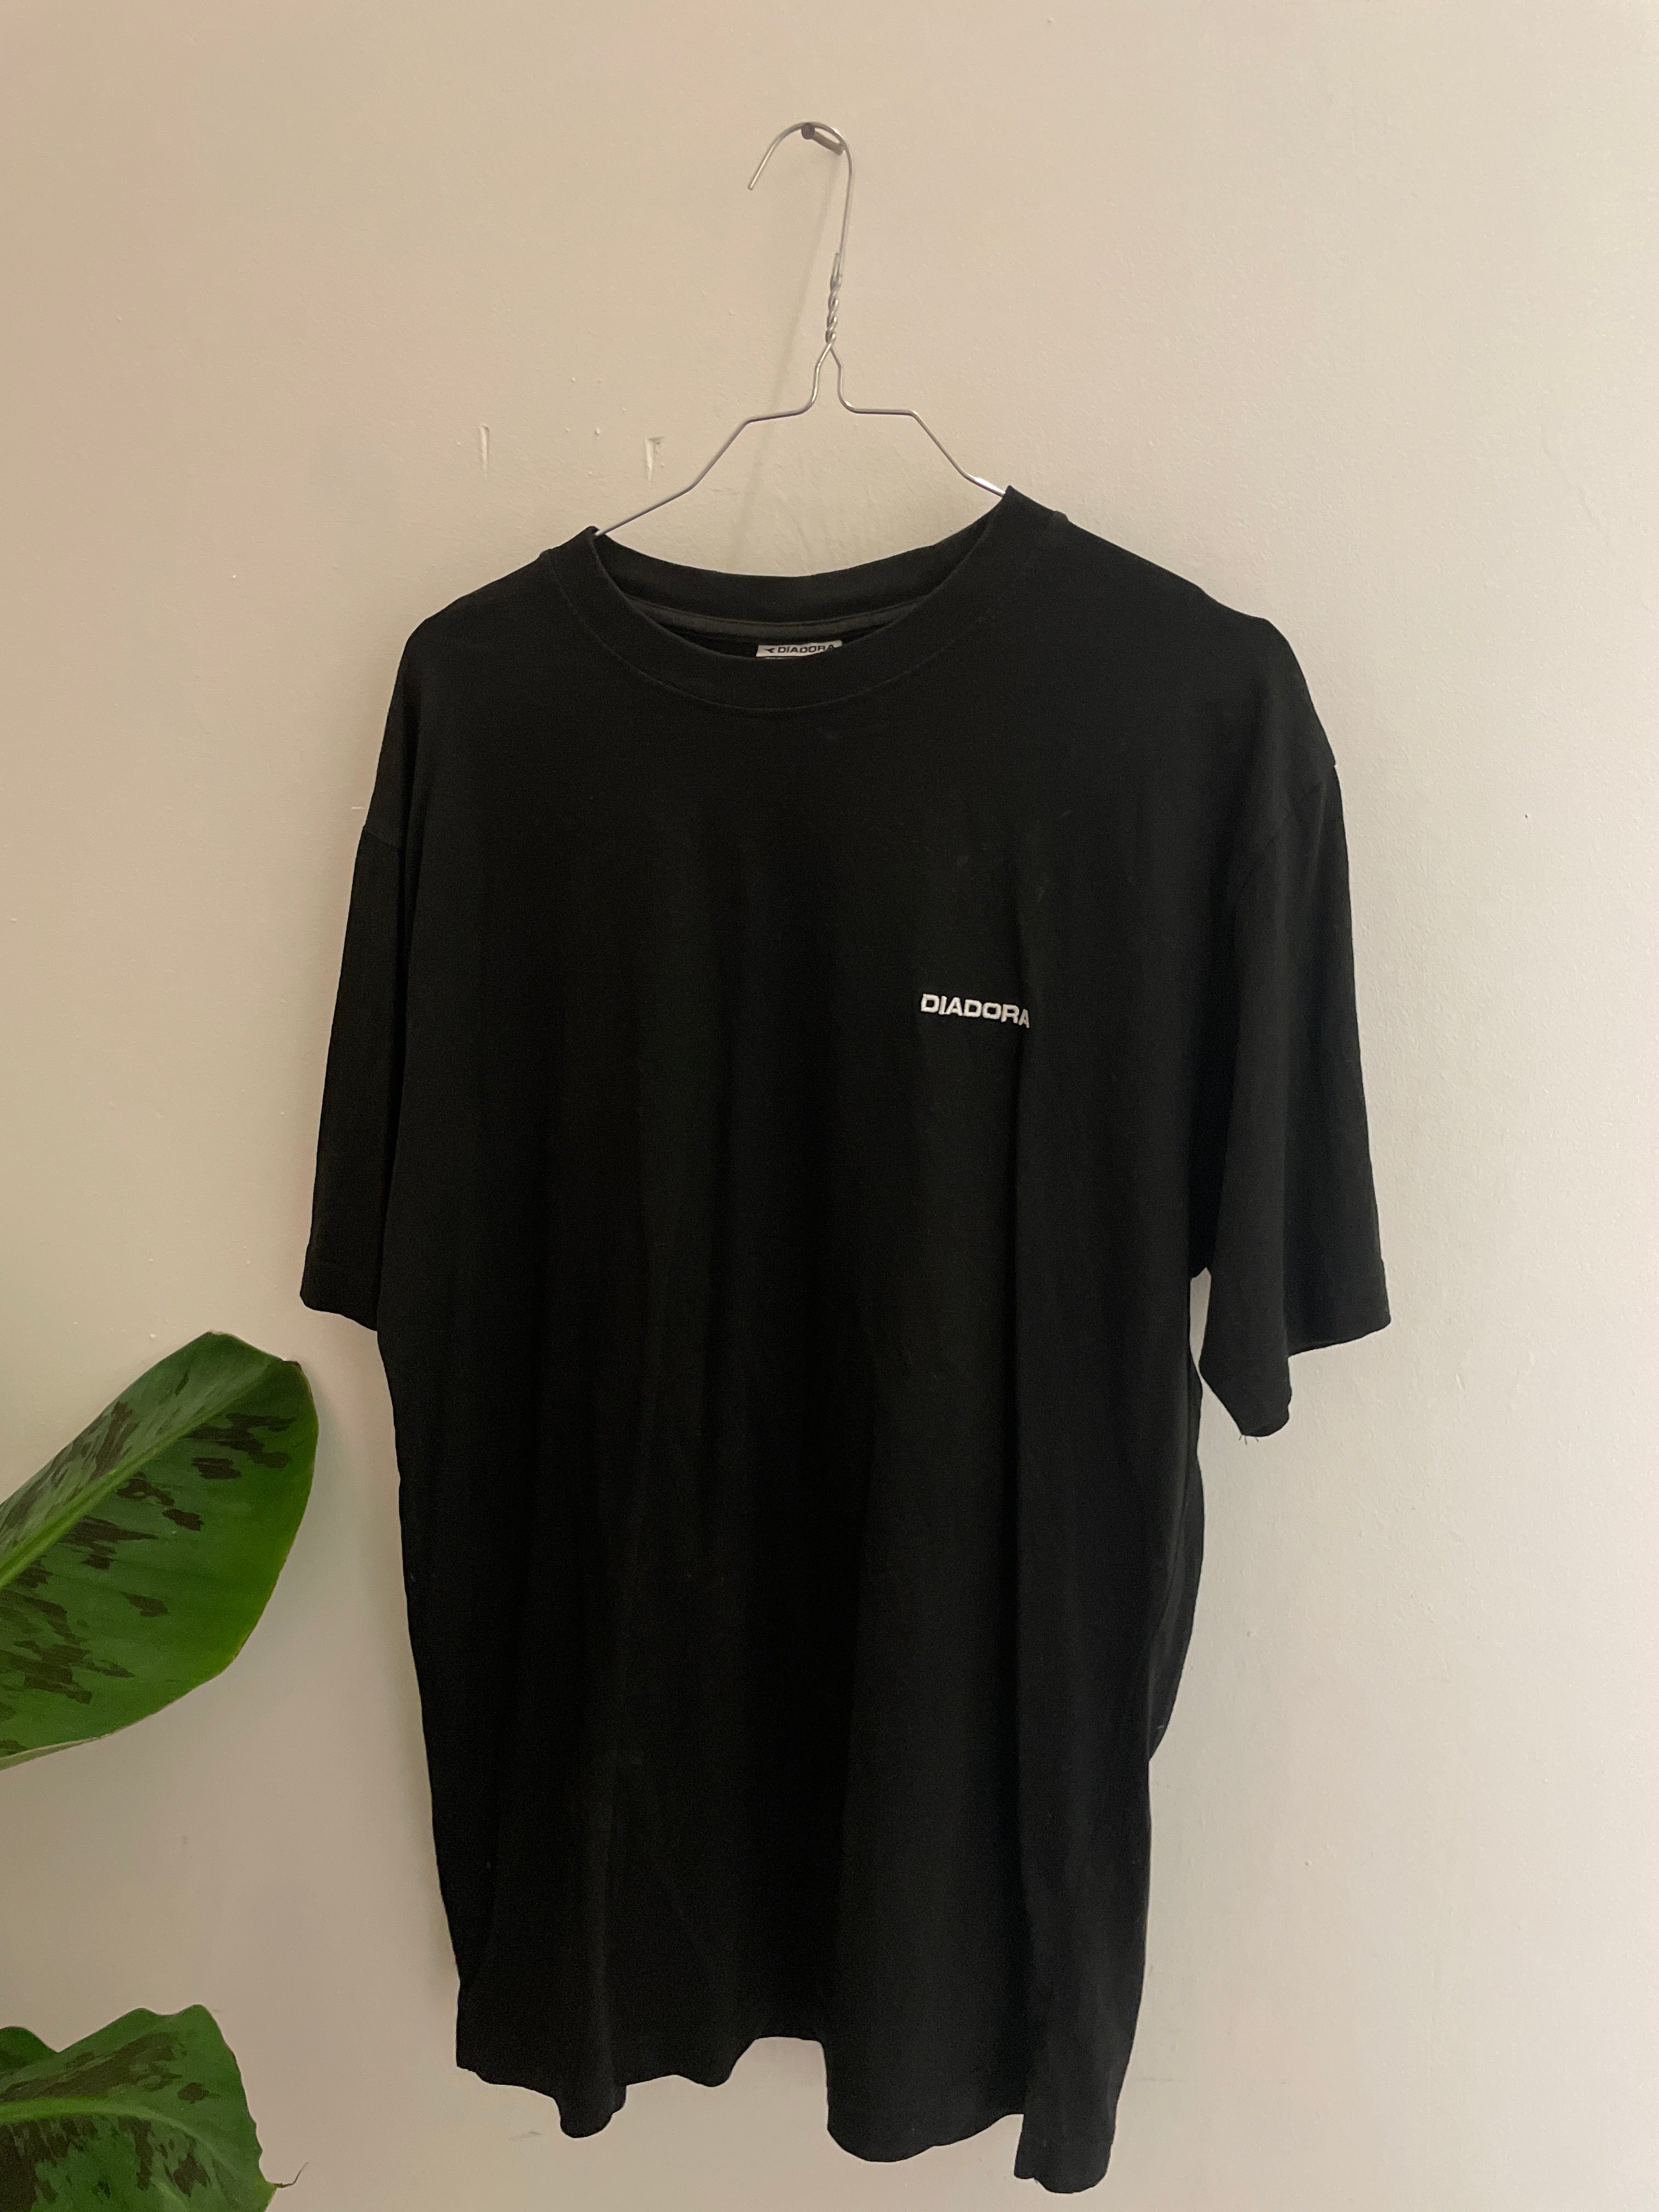 Vintage black diadora italian sport design tshirt size S